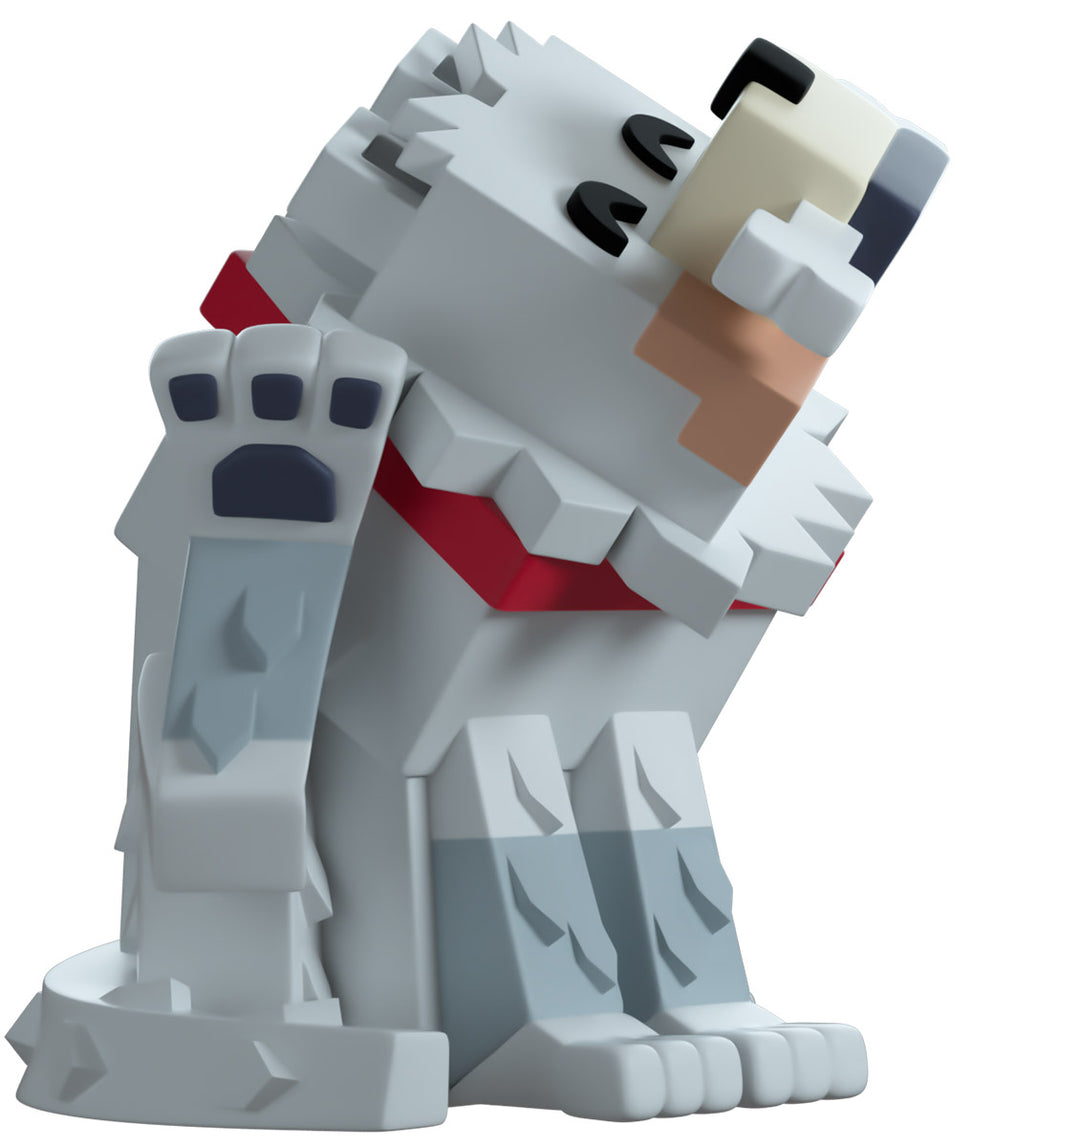 Youtooz Official Minecraft Wolf Figure : PRE-ORDER ETA MID-END Q2